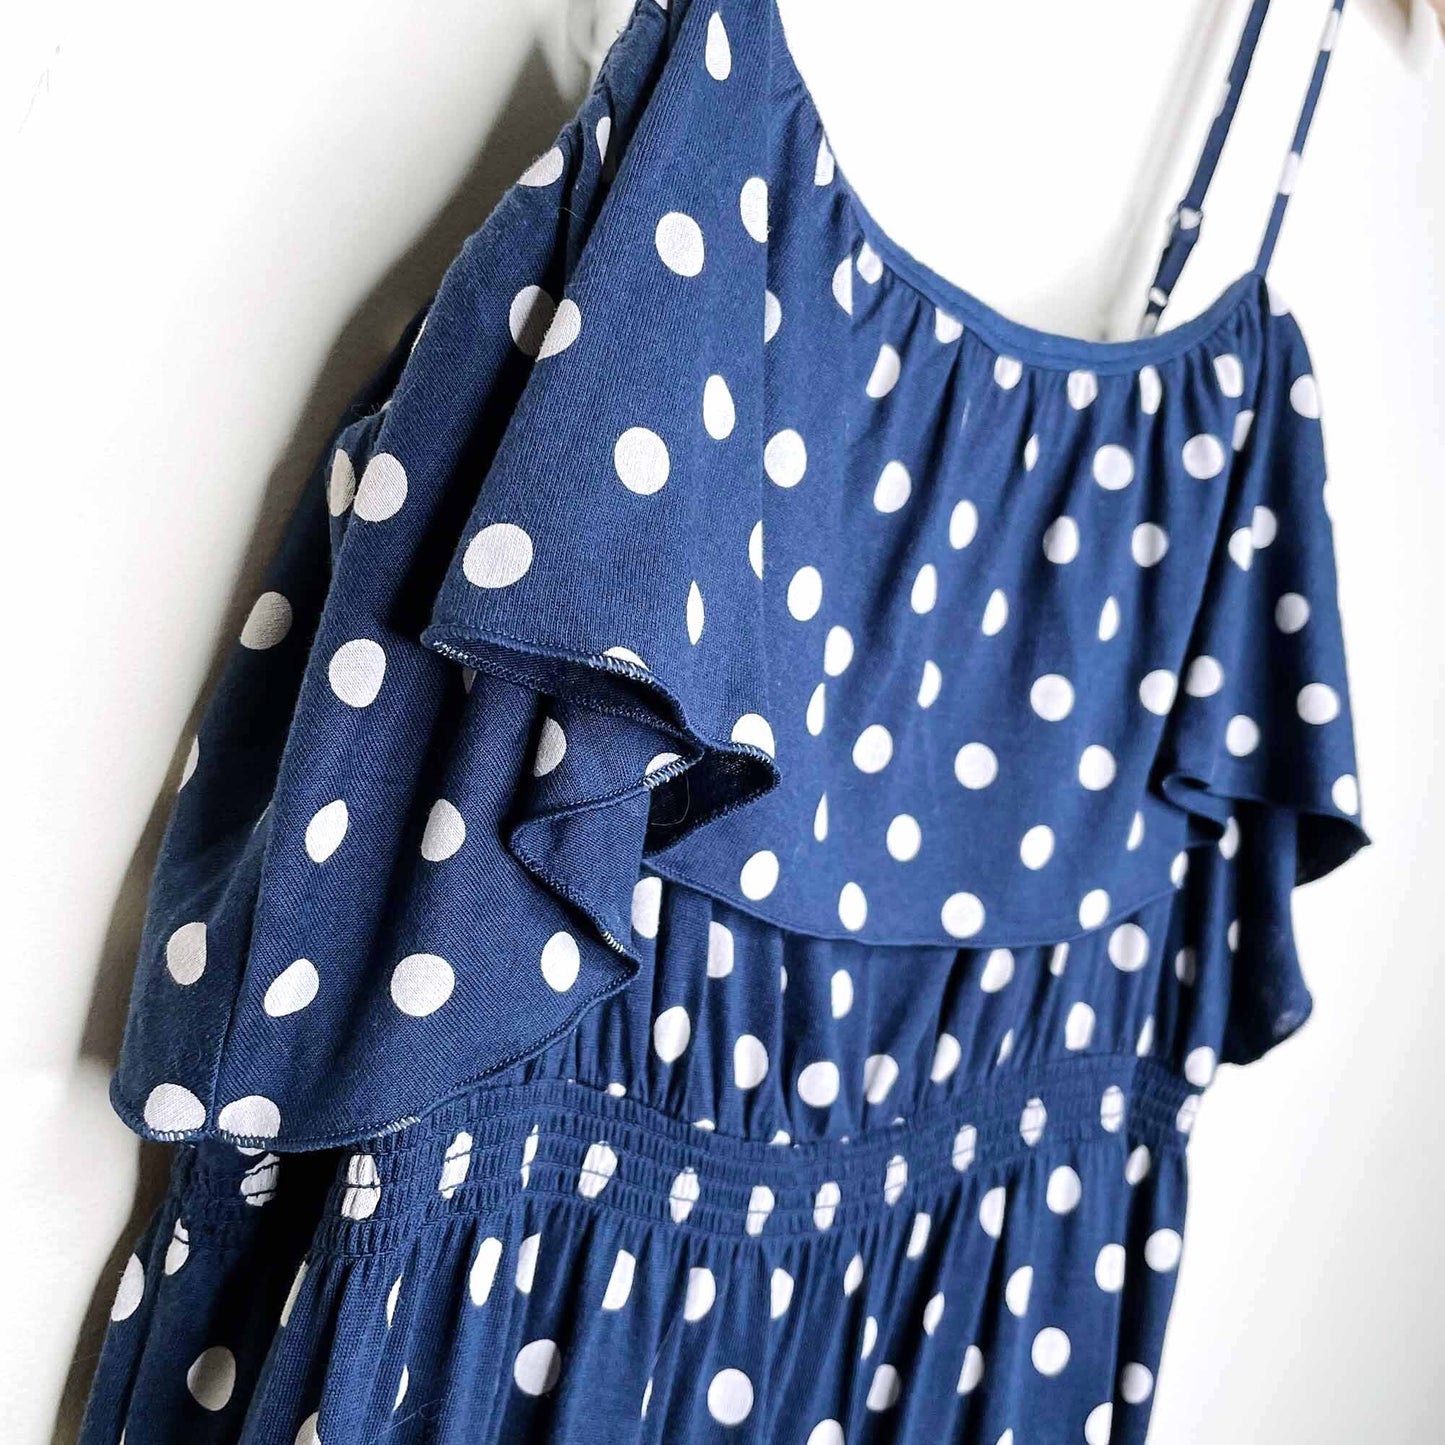 juicy couture blue polka dot ruffle summer dress - size medium